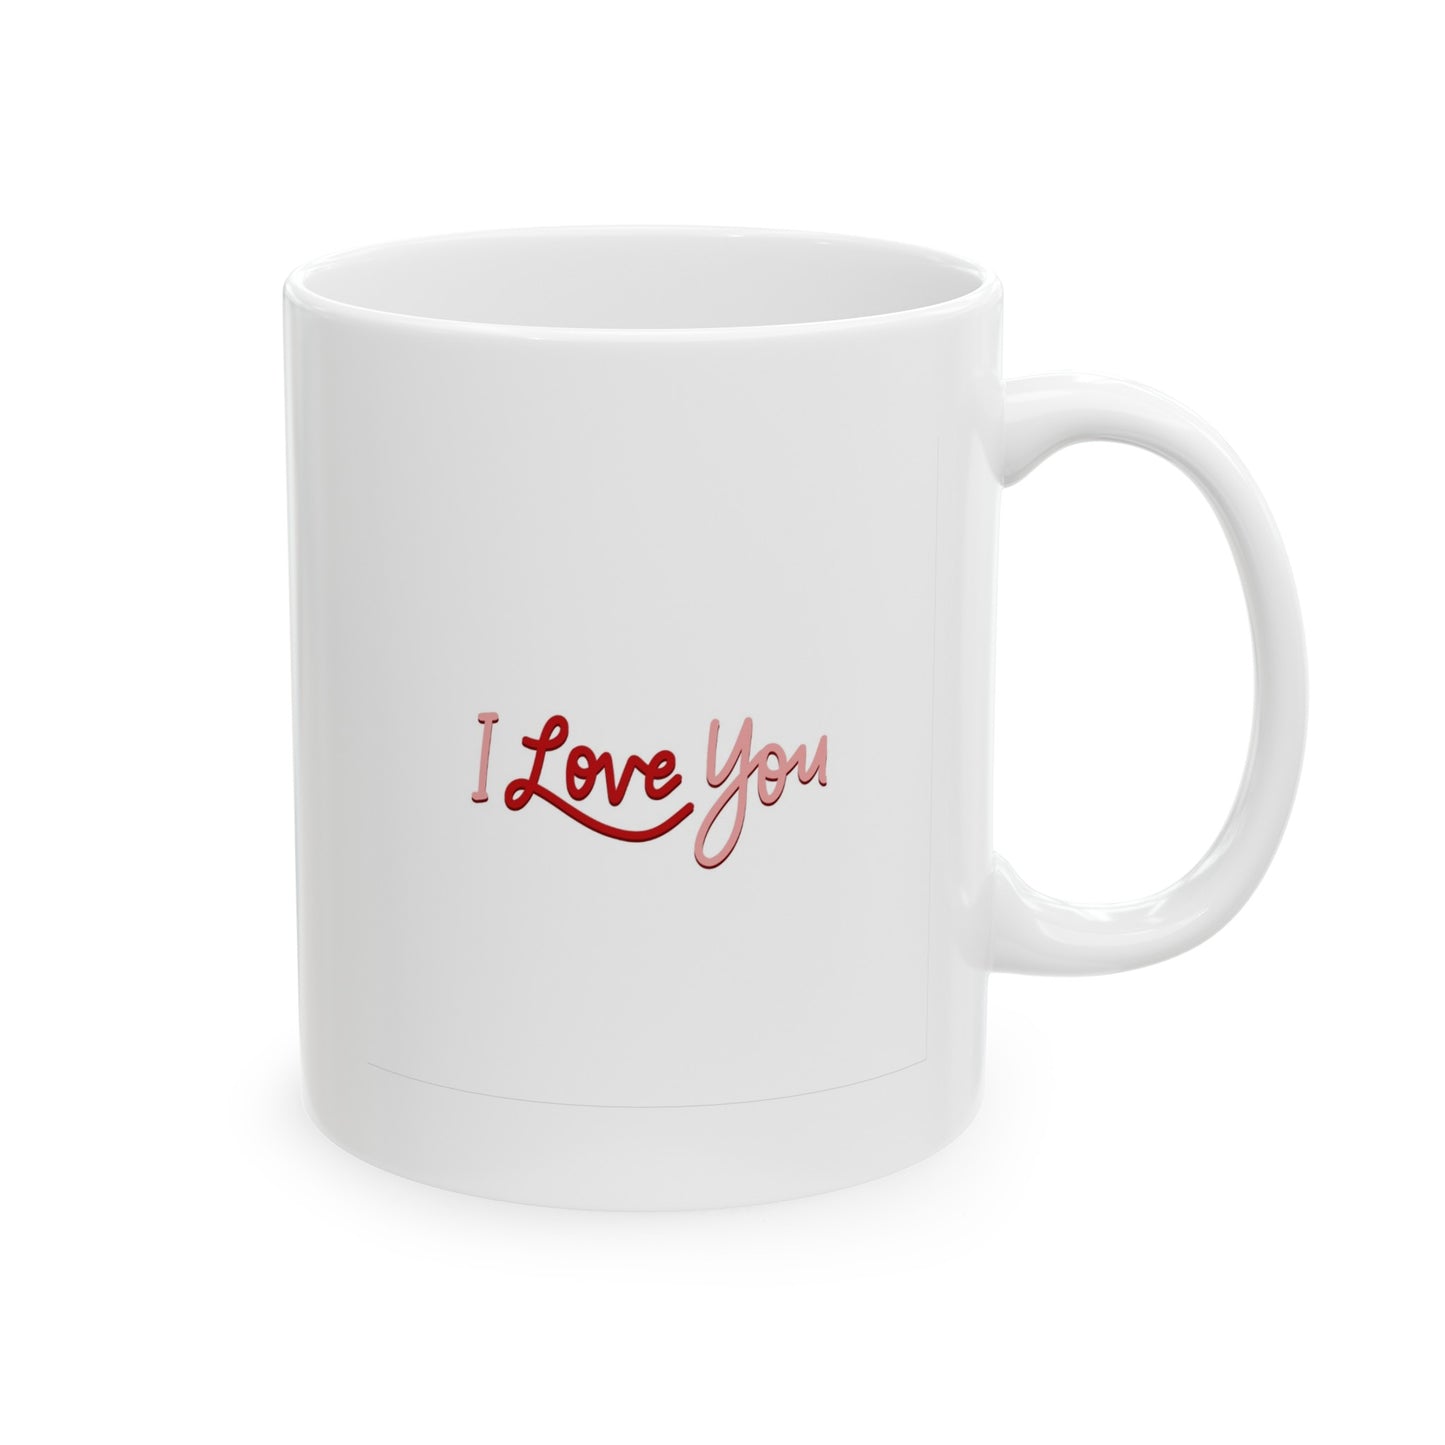 Coffe mug personalized for mom